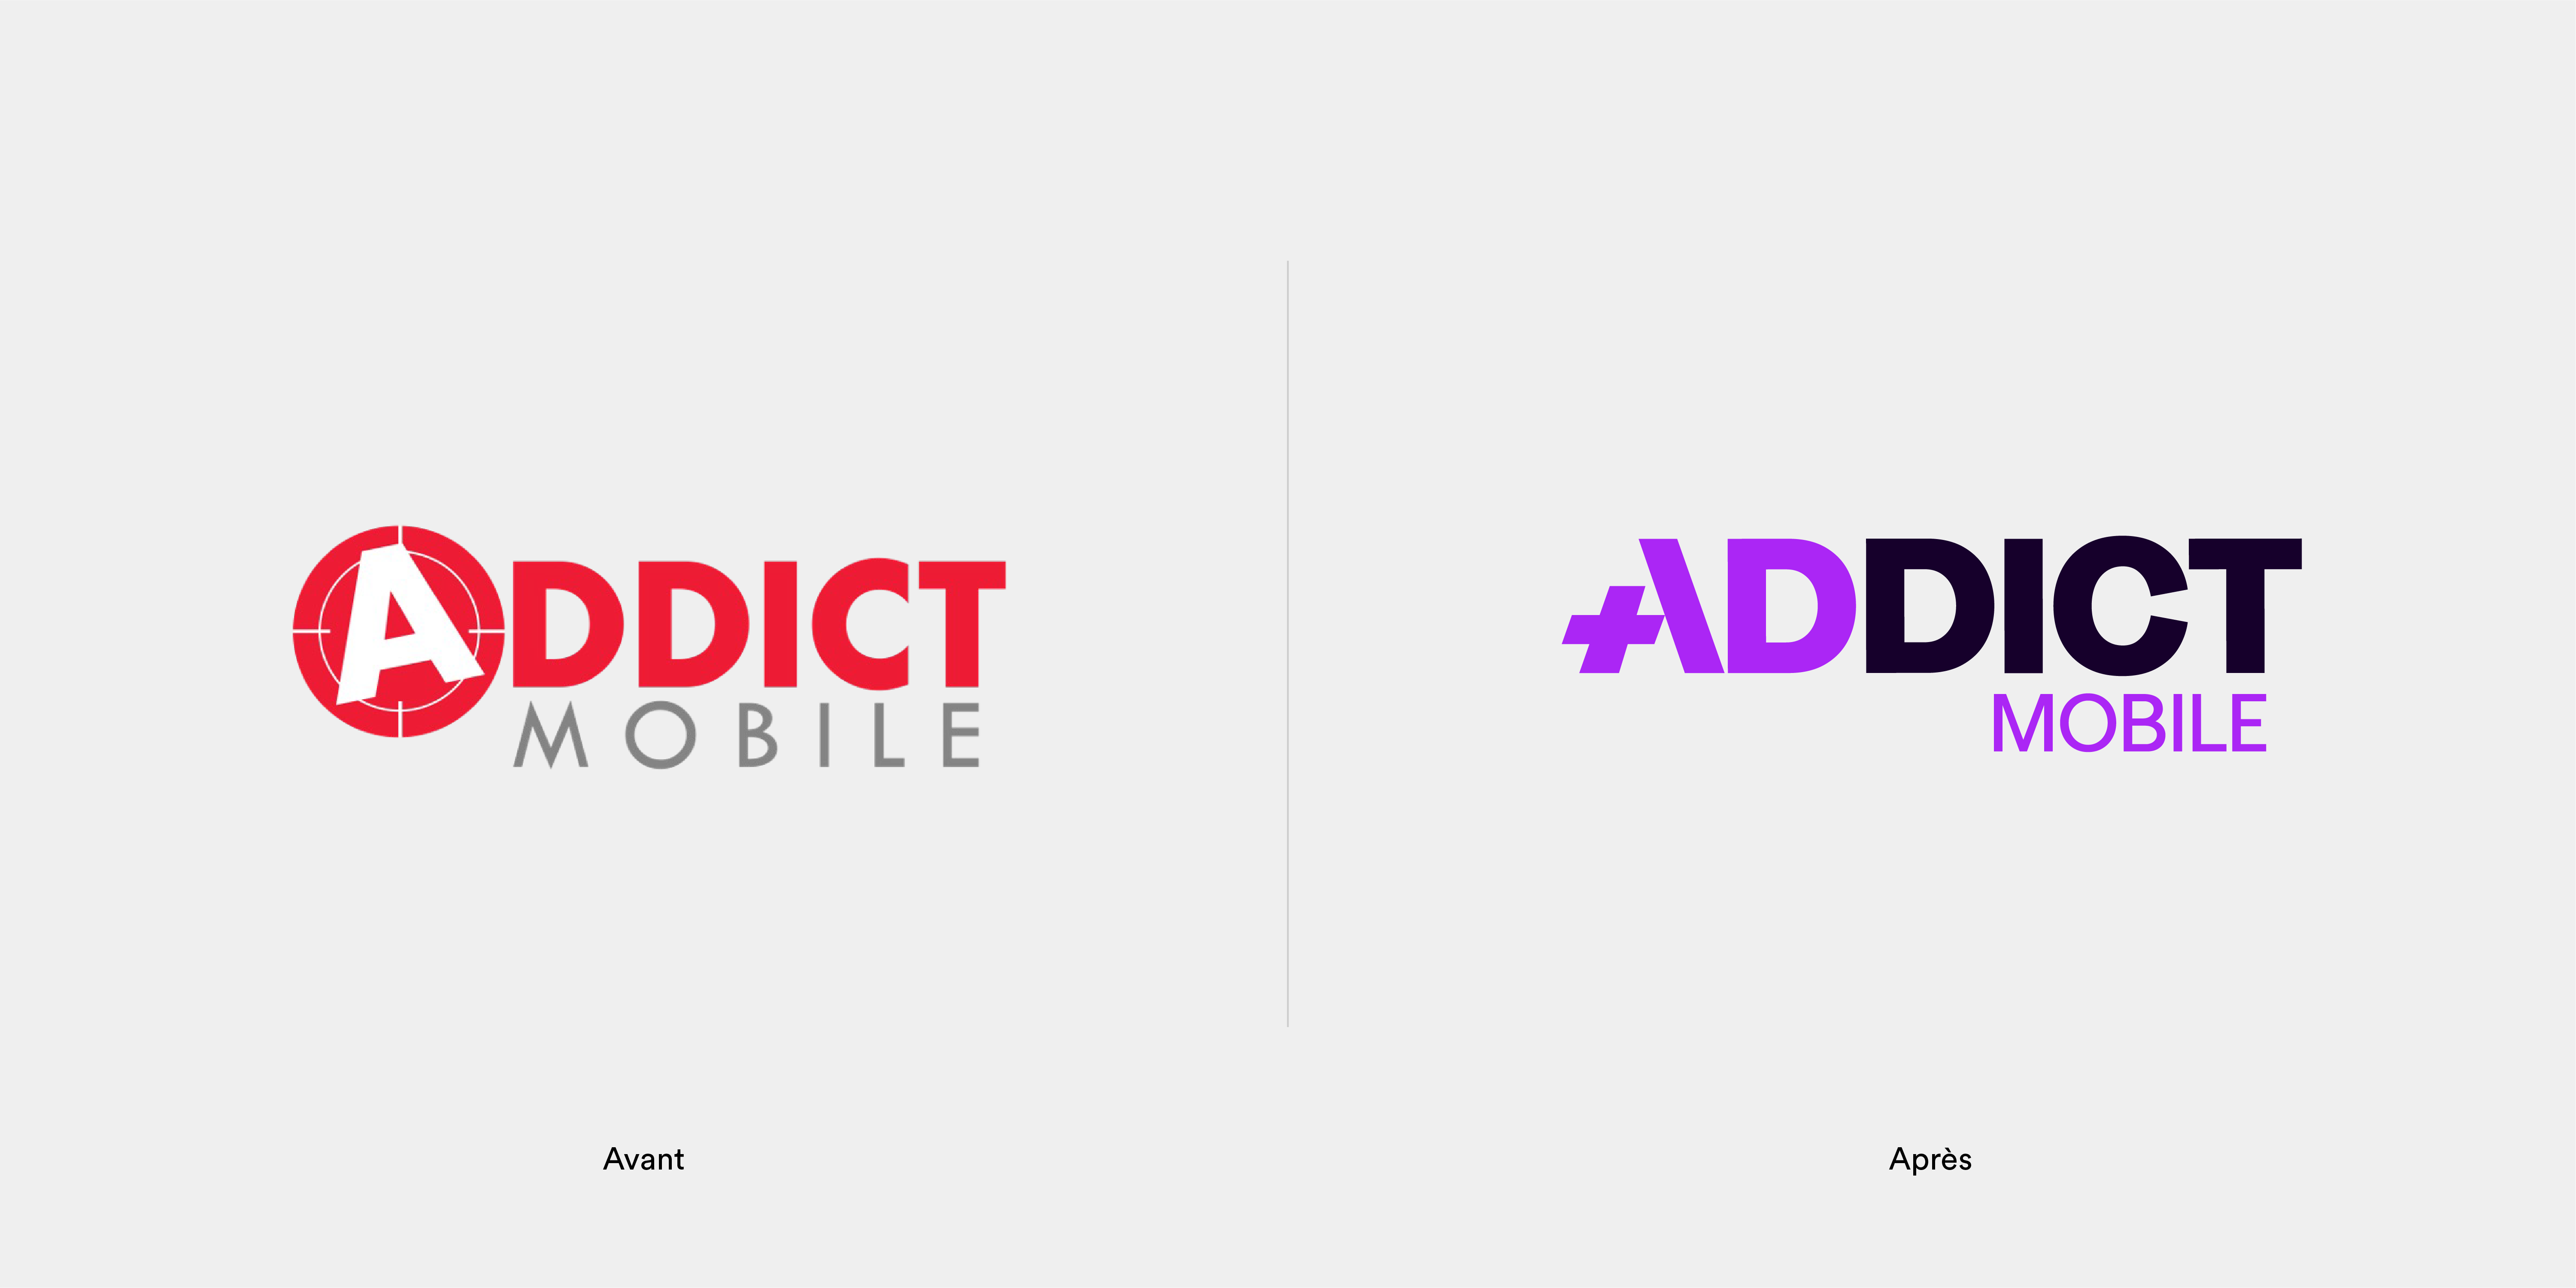 Josselin-Tourette-Addict-Mobile-identite-visuelle-avant-apres